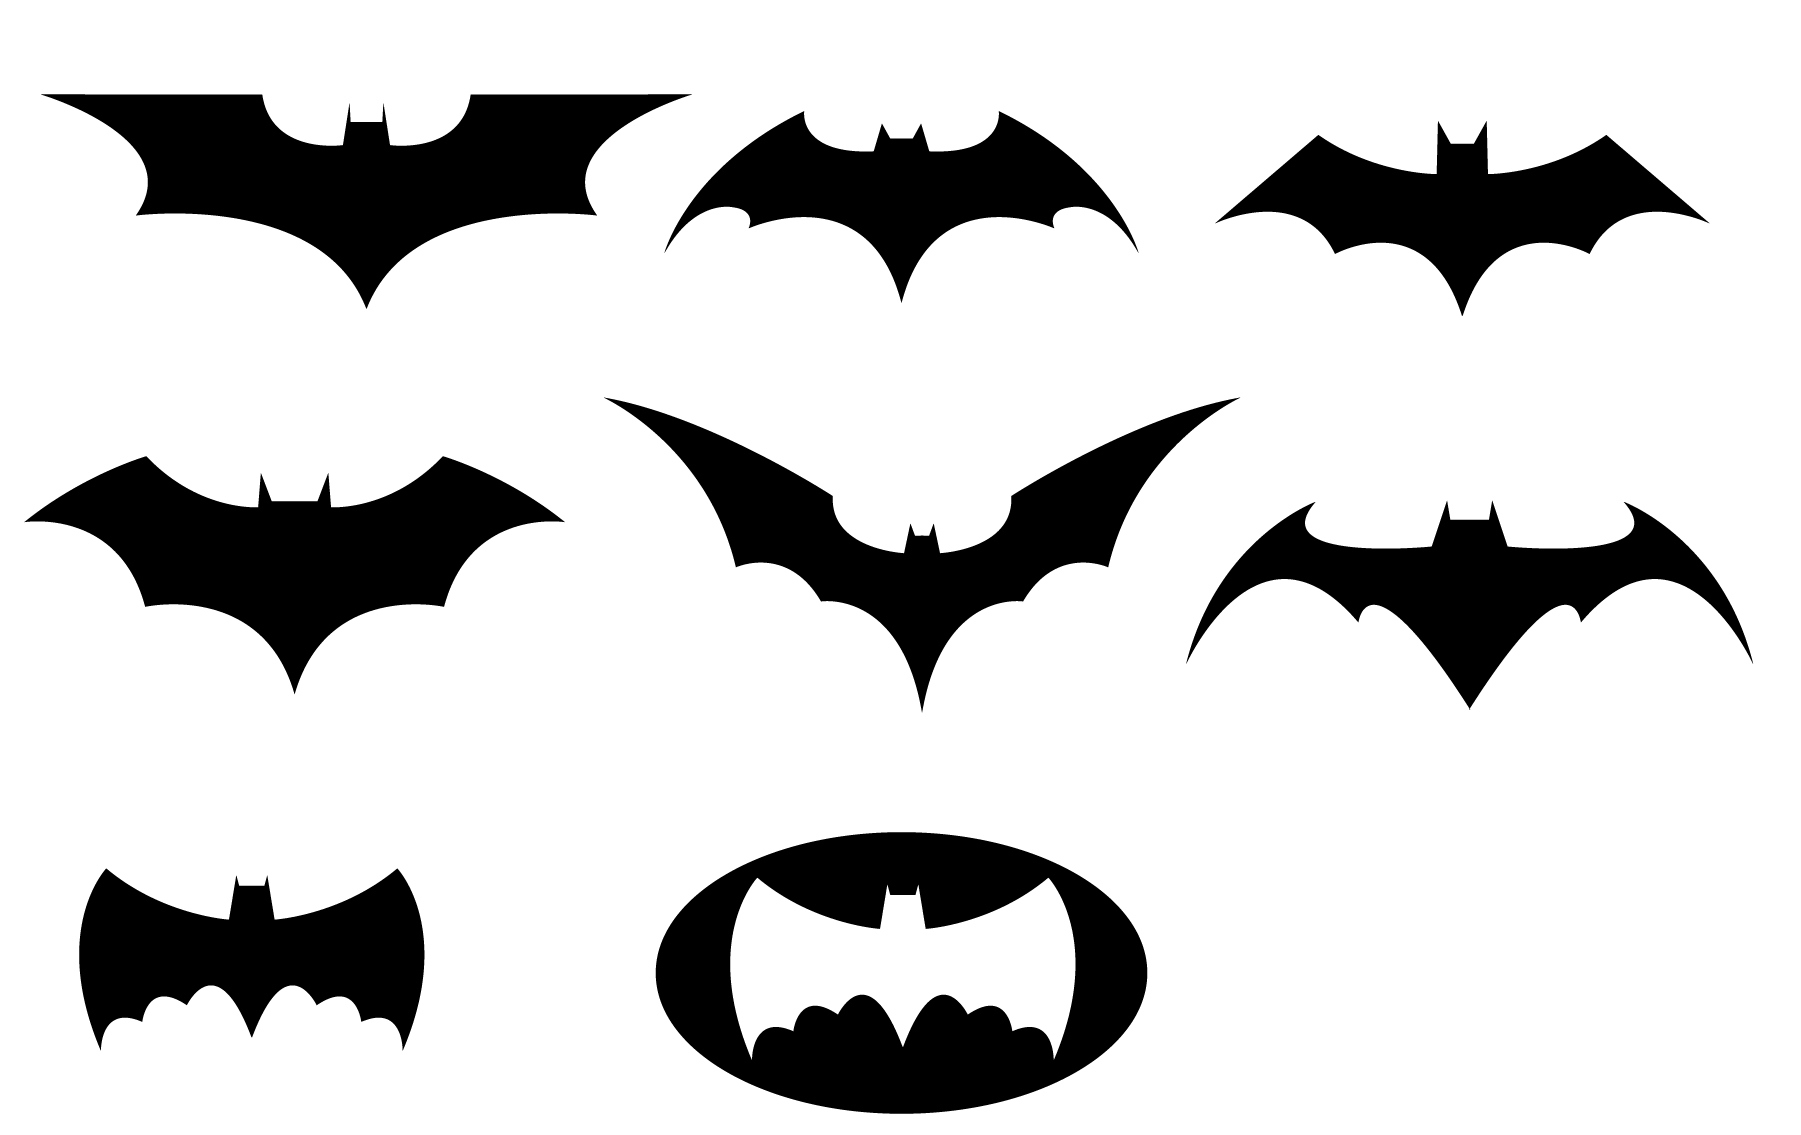 Batman Emblem Printable   Clipart Best